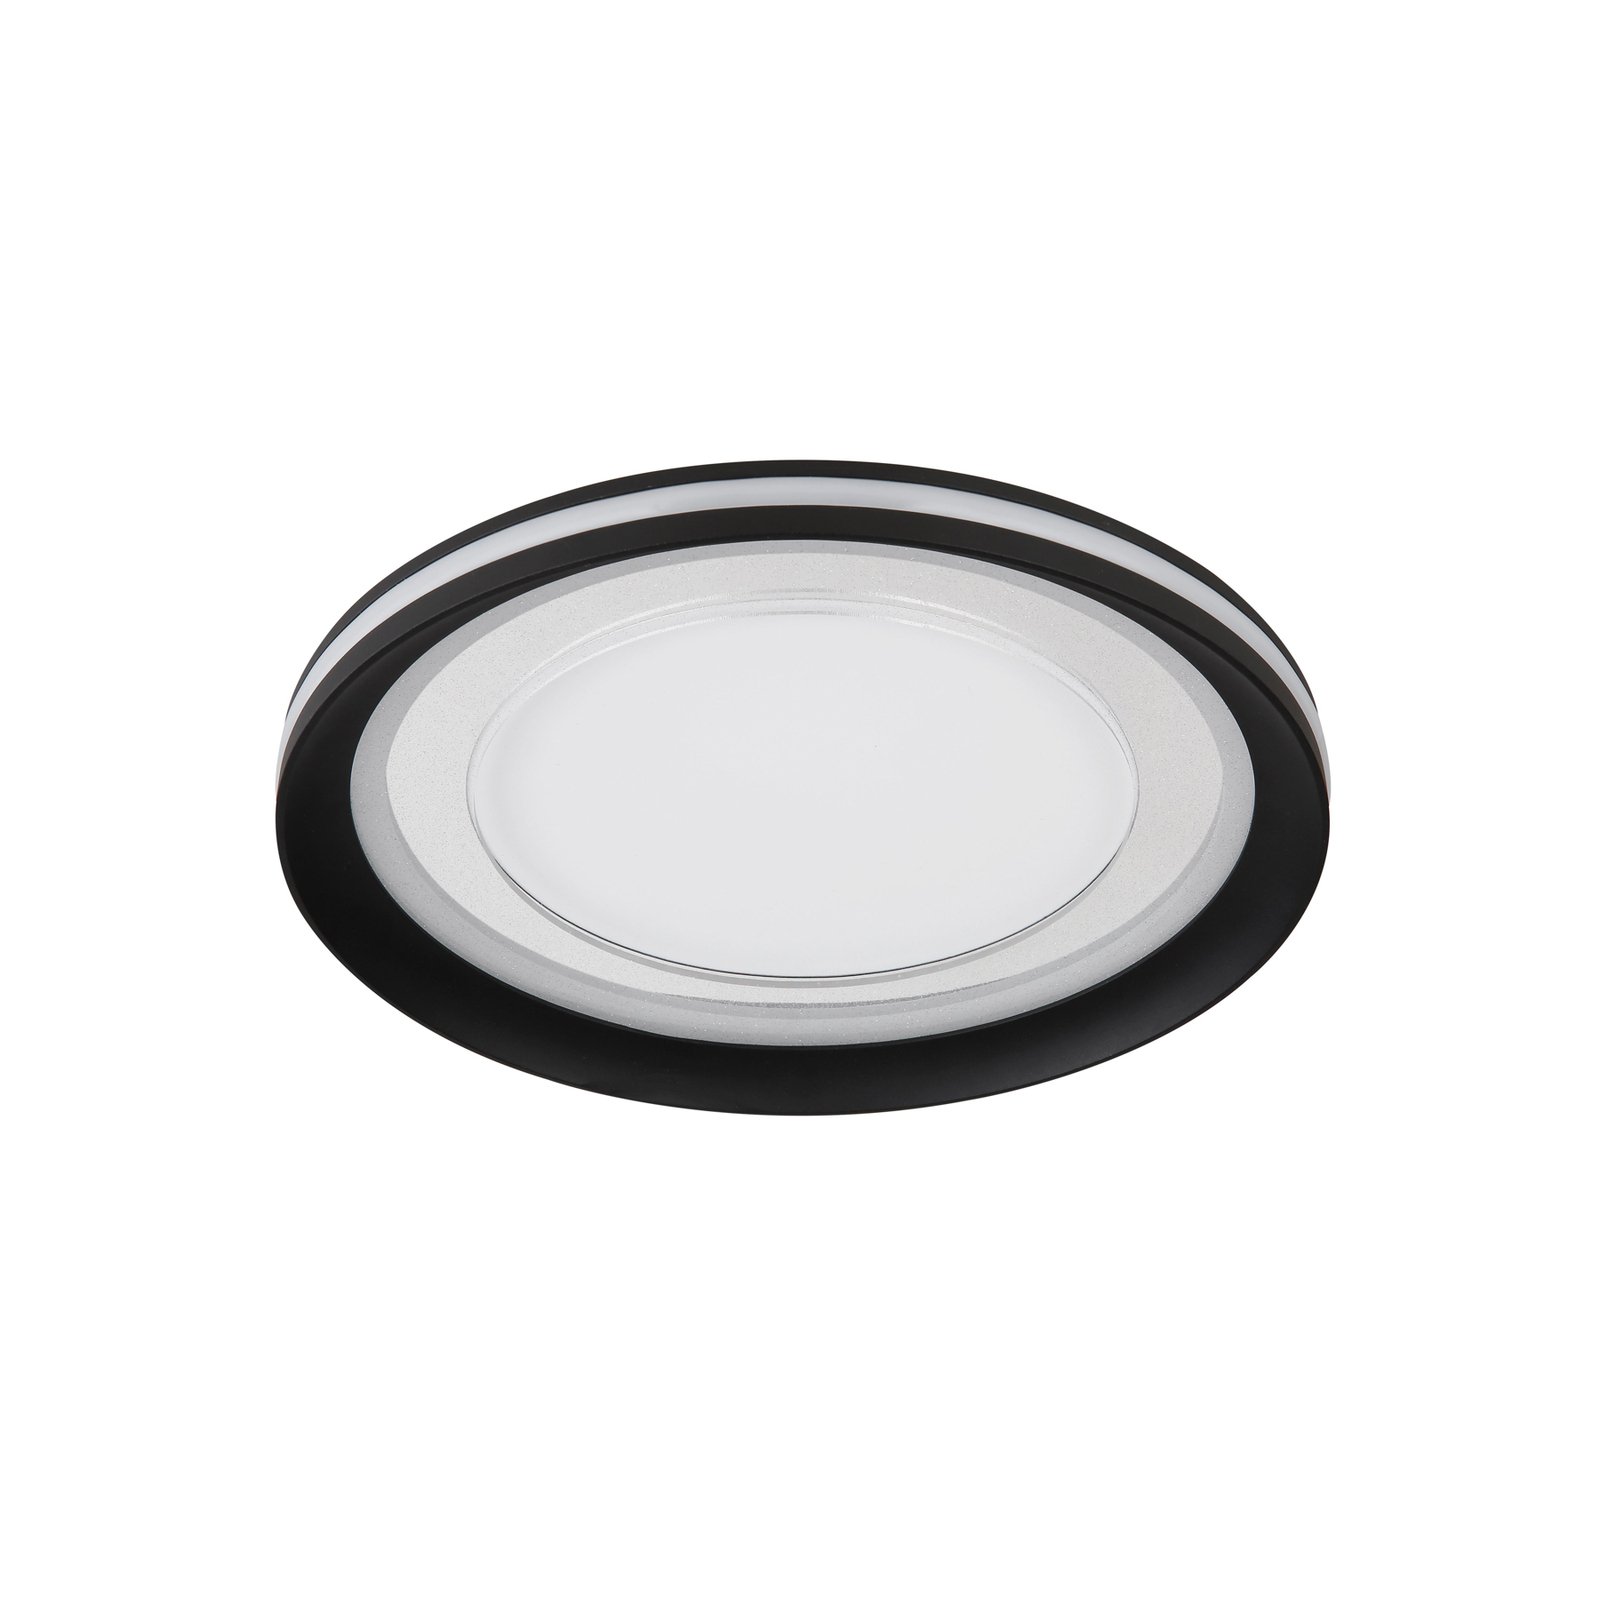 Clarino plafondlamp, Ø 36 cm, zwart/wit, acryl